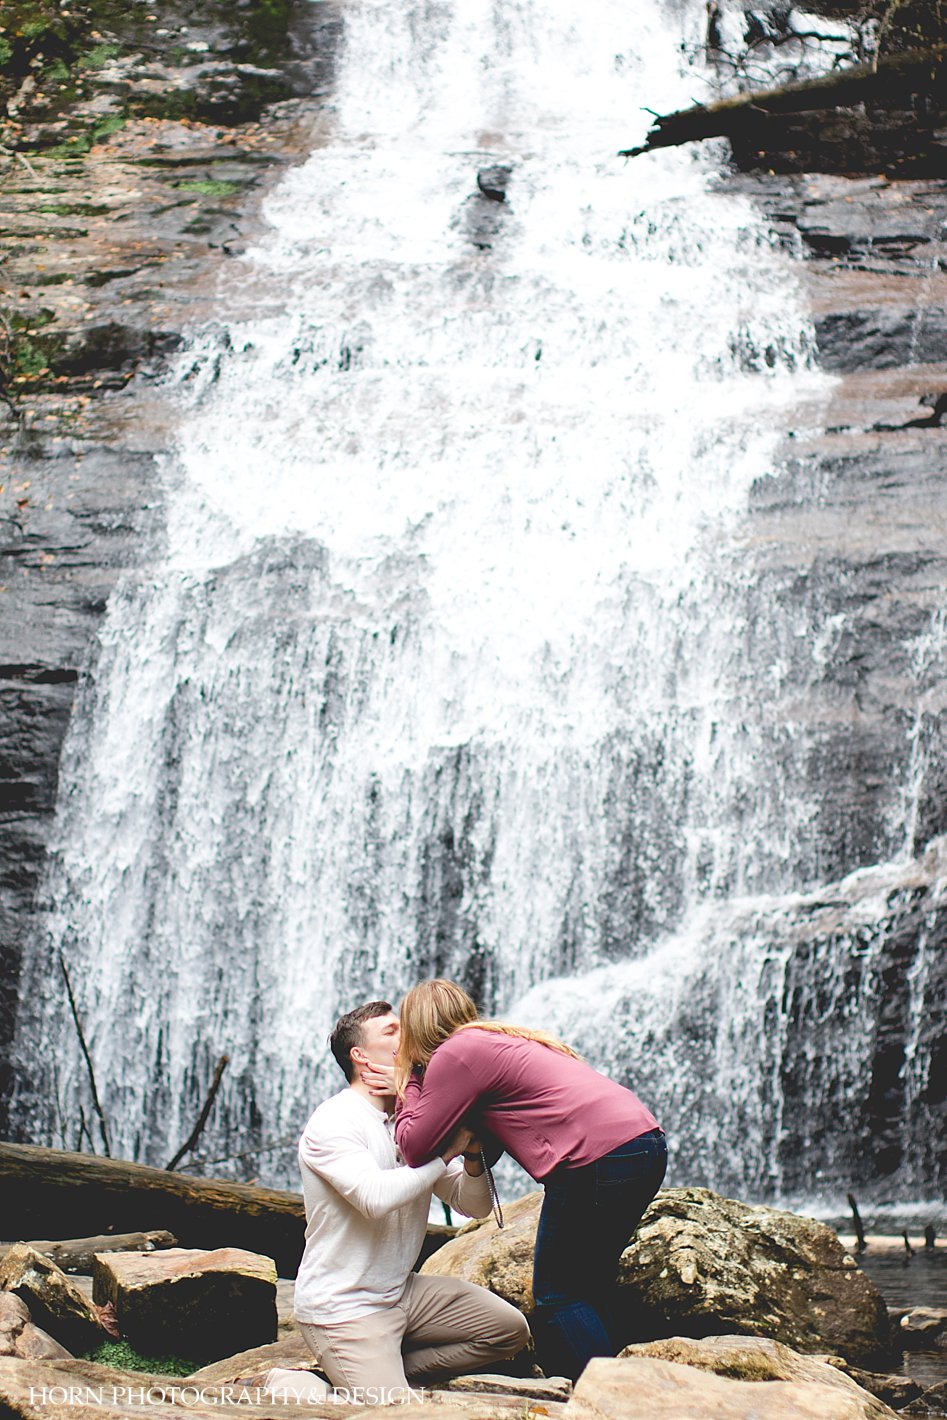 waterfall proposal, she said i do, atlanta proposal photography  Helton Creek Falls